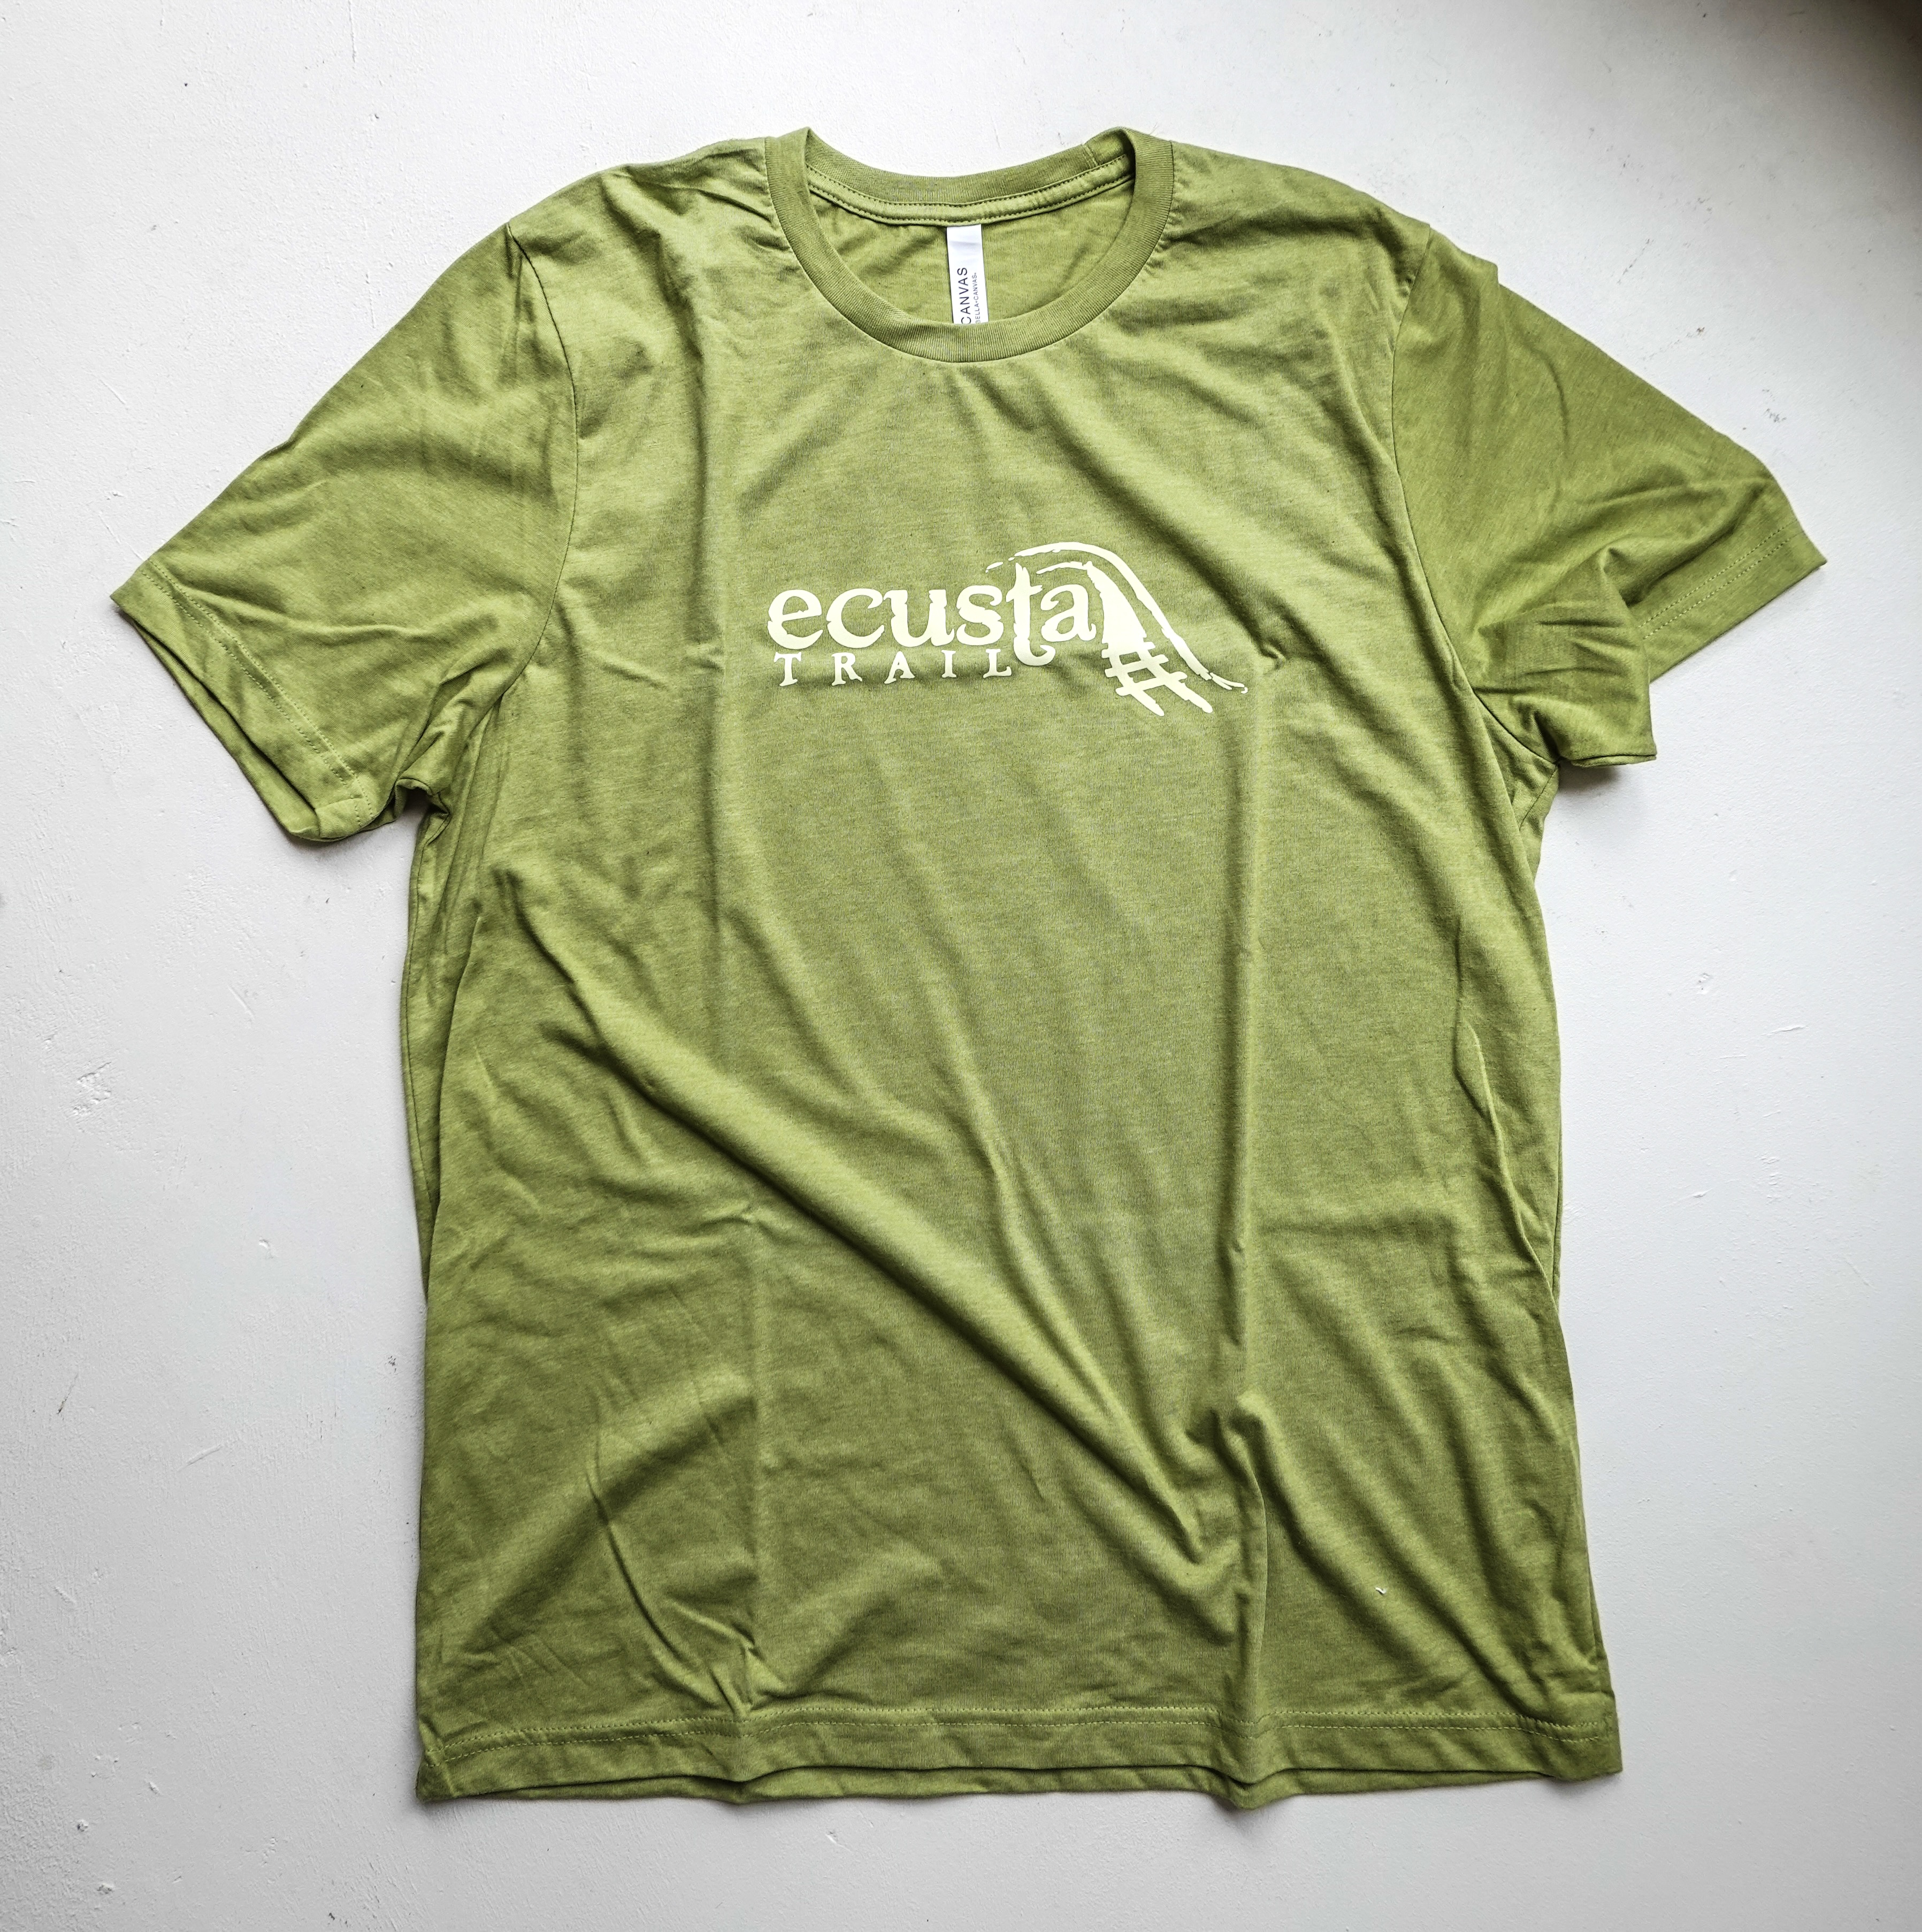 Ecusta Trail T-Shirt - Light Green